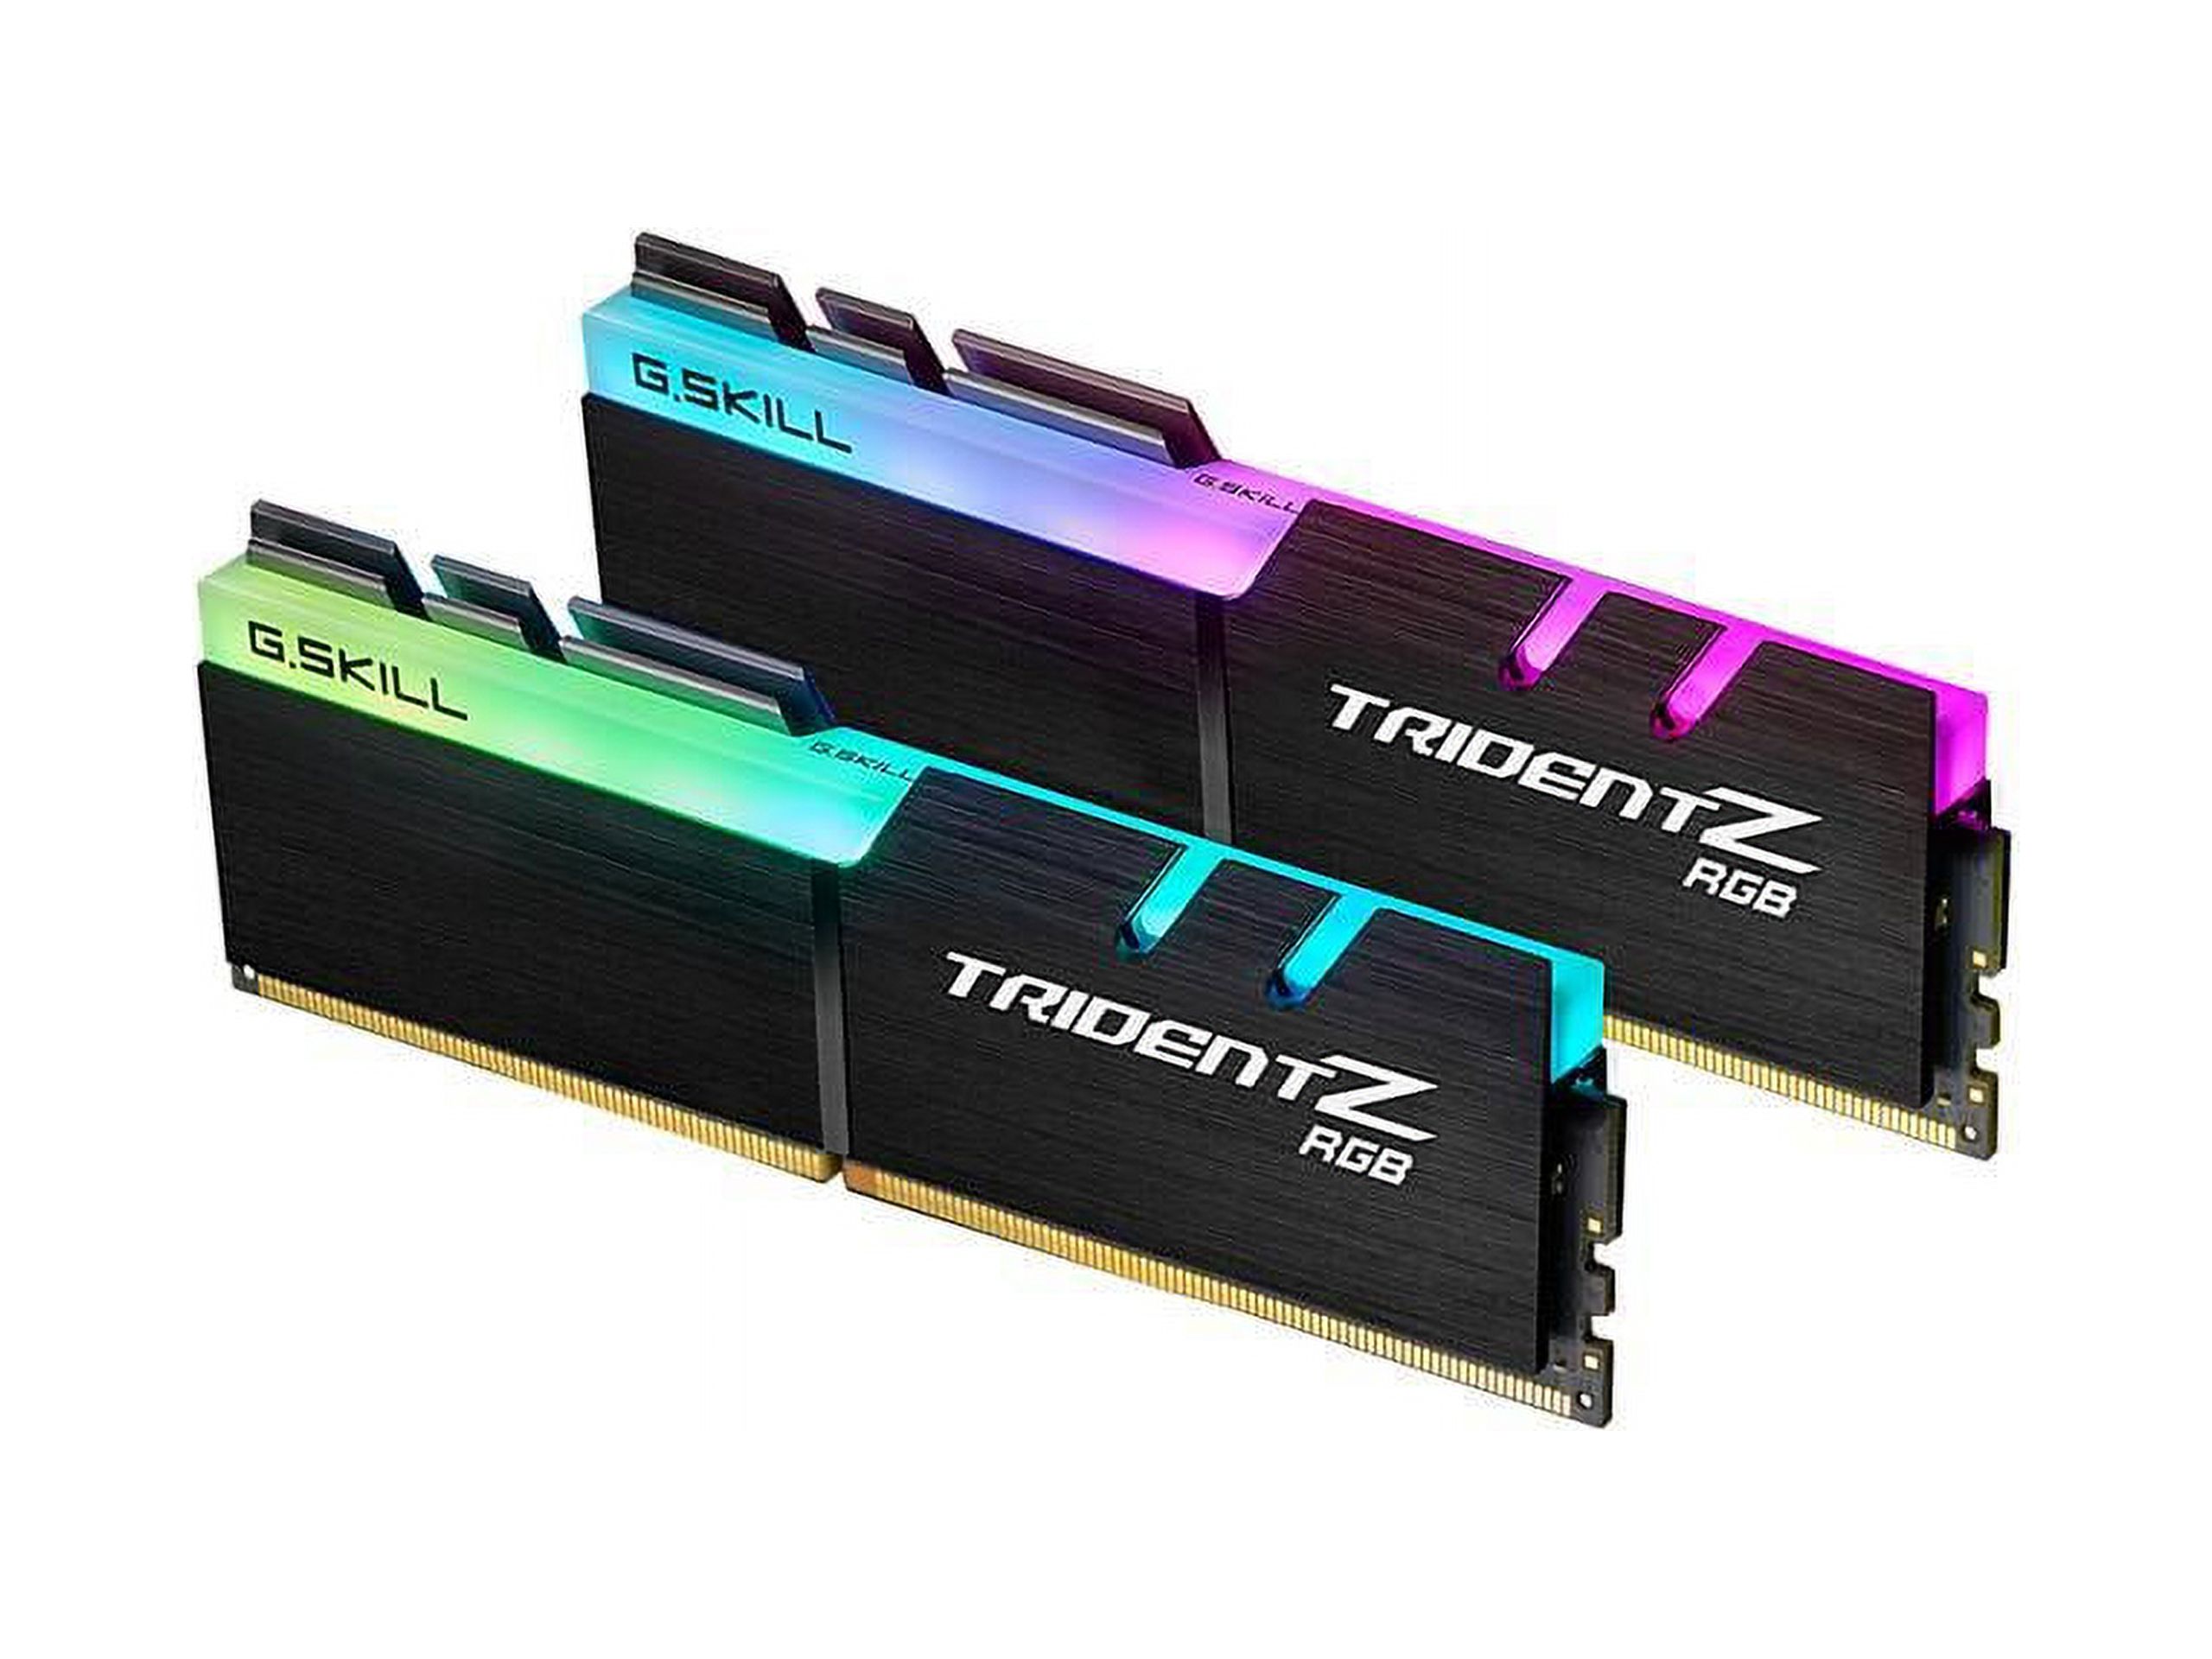 G.SKILL TridentZ RGB Series 16GB (2 x 8GB) 288-Pin PC RAM DDR4 3200 (PC4 25600) Desktop Memory Model F4-3200C16D-16GTZR - image 1 of 2